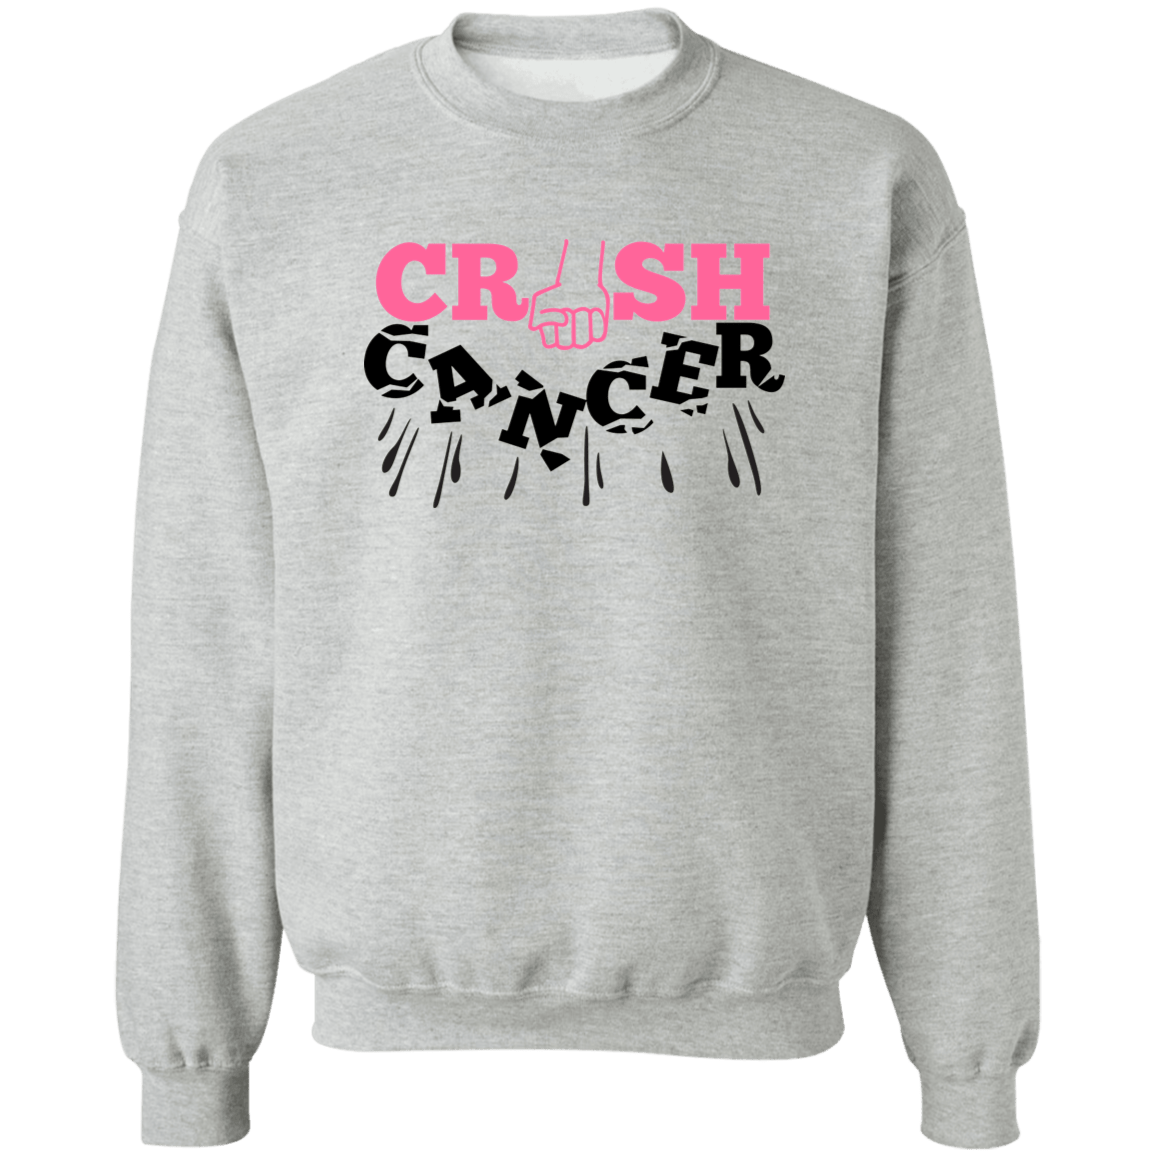 Crush Cancer Unisex Crewneck Pullover Sweatshirt